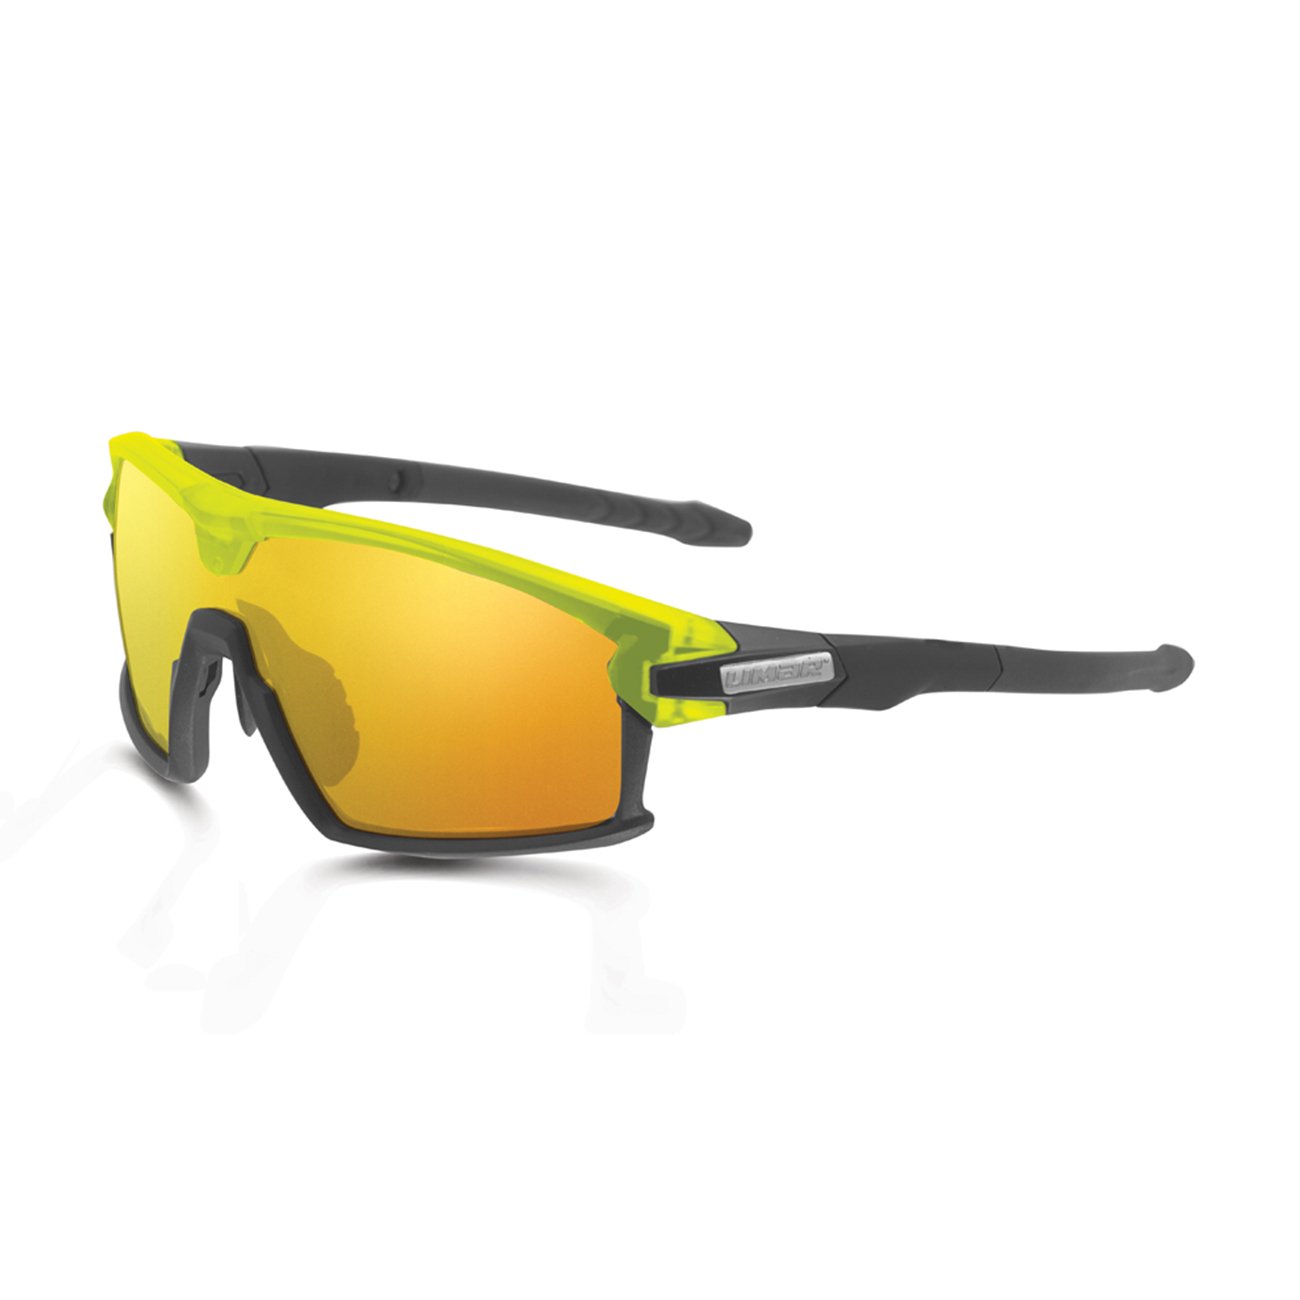 Limar Cycling Sunglasses - F 90 PC CE - Matte Titanium / Yellow